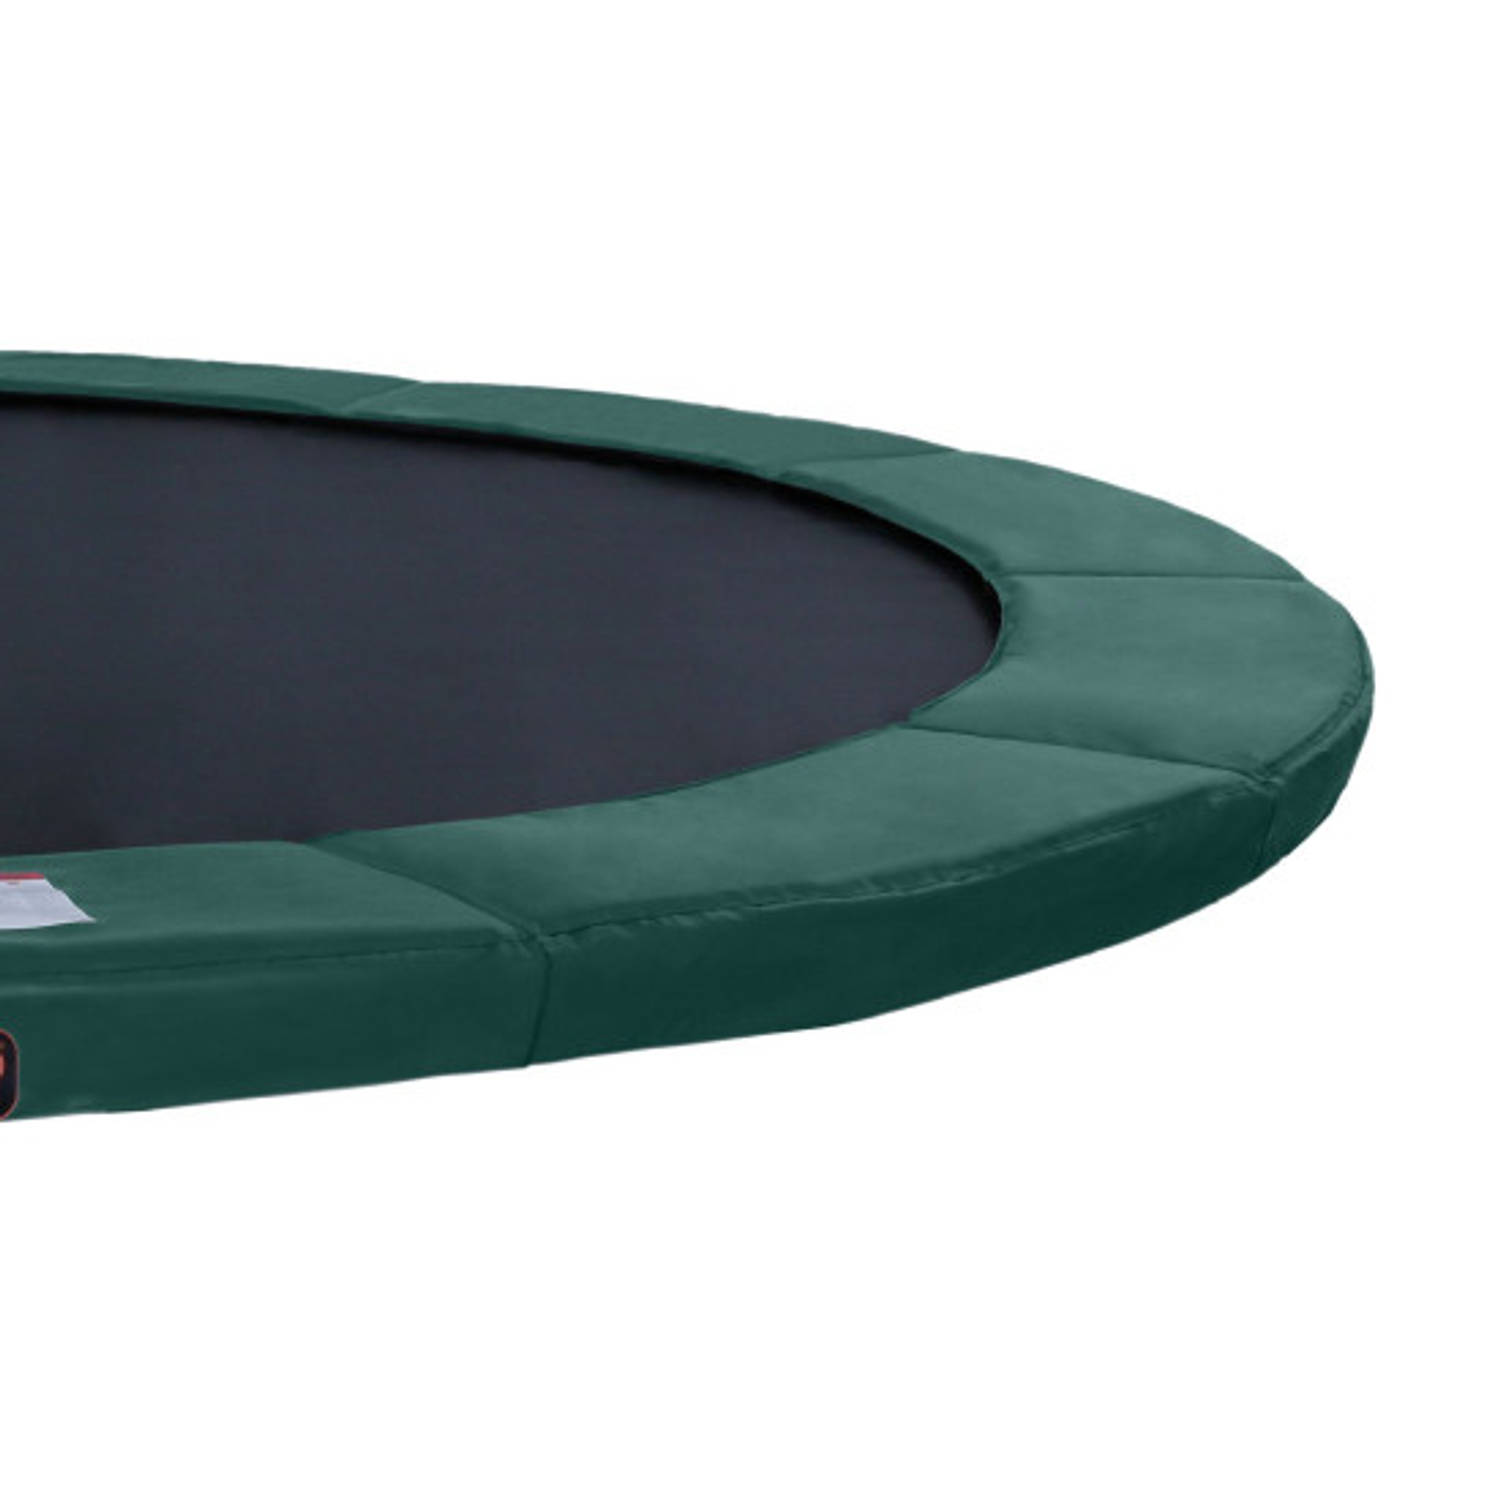 Avyna Pro-Line 08 trampoline rand - 245 cm - Groen